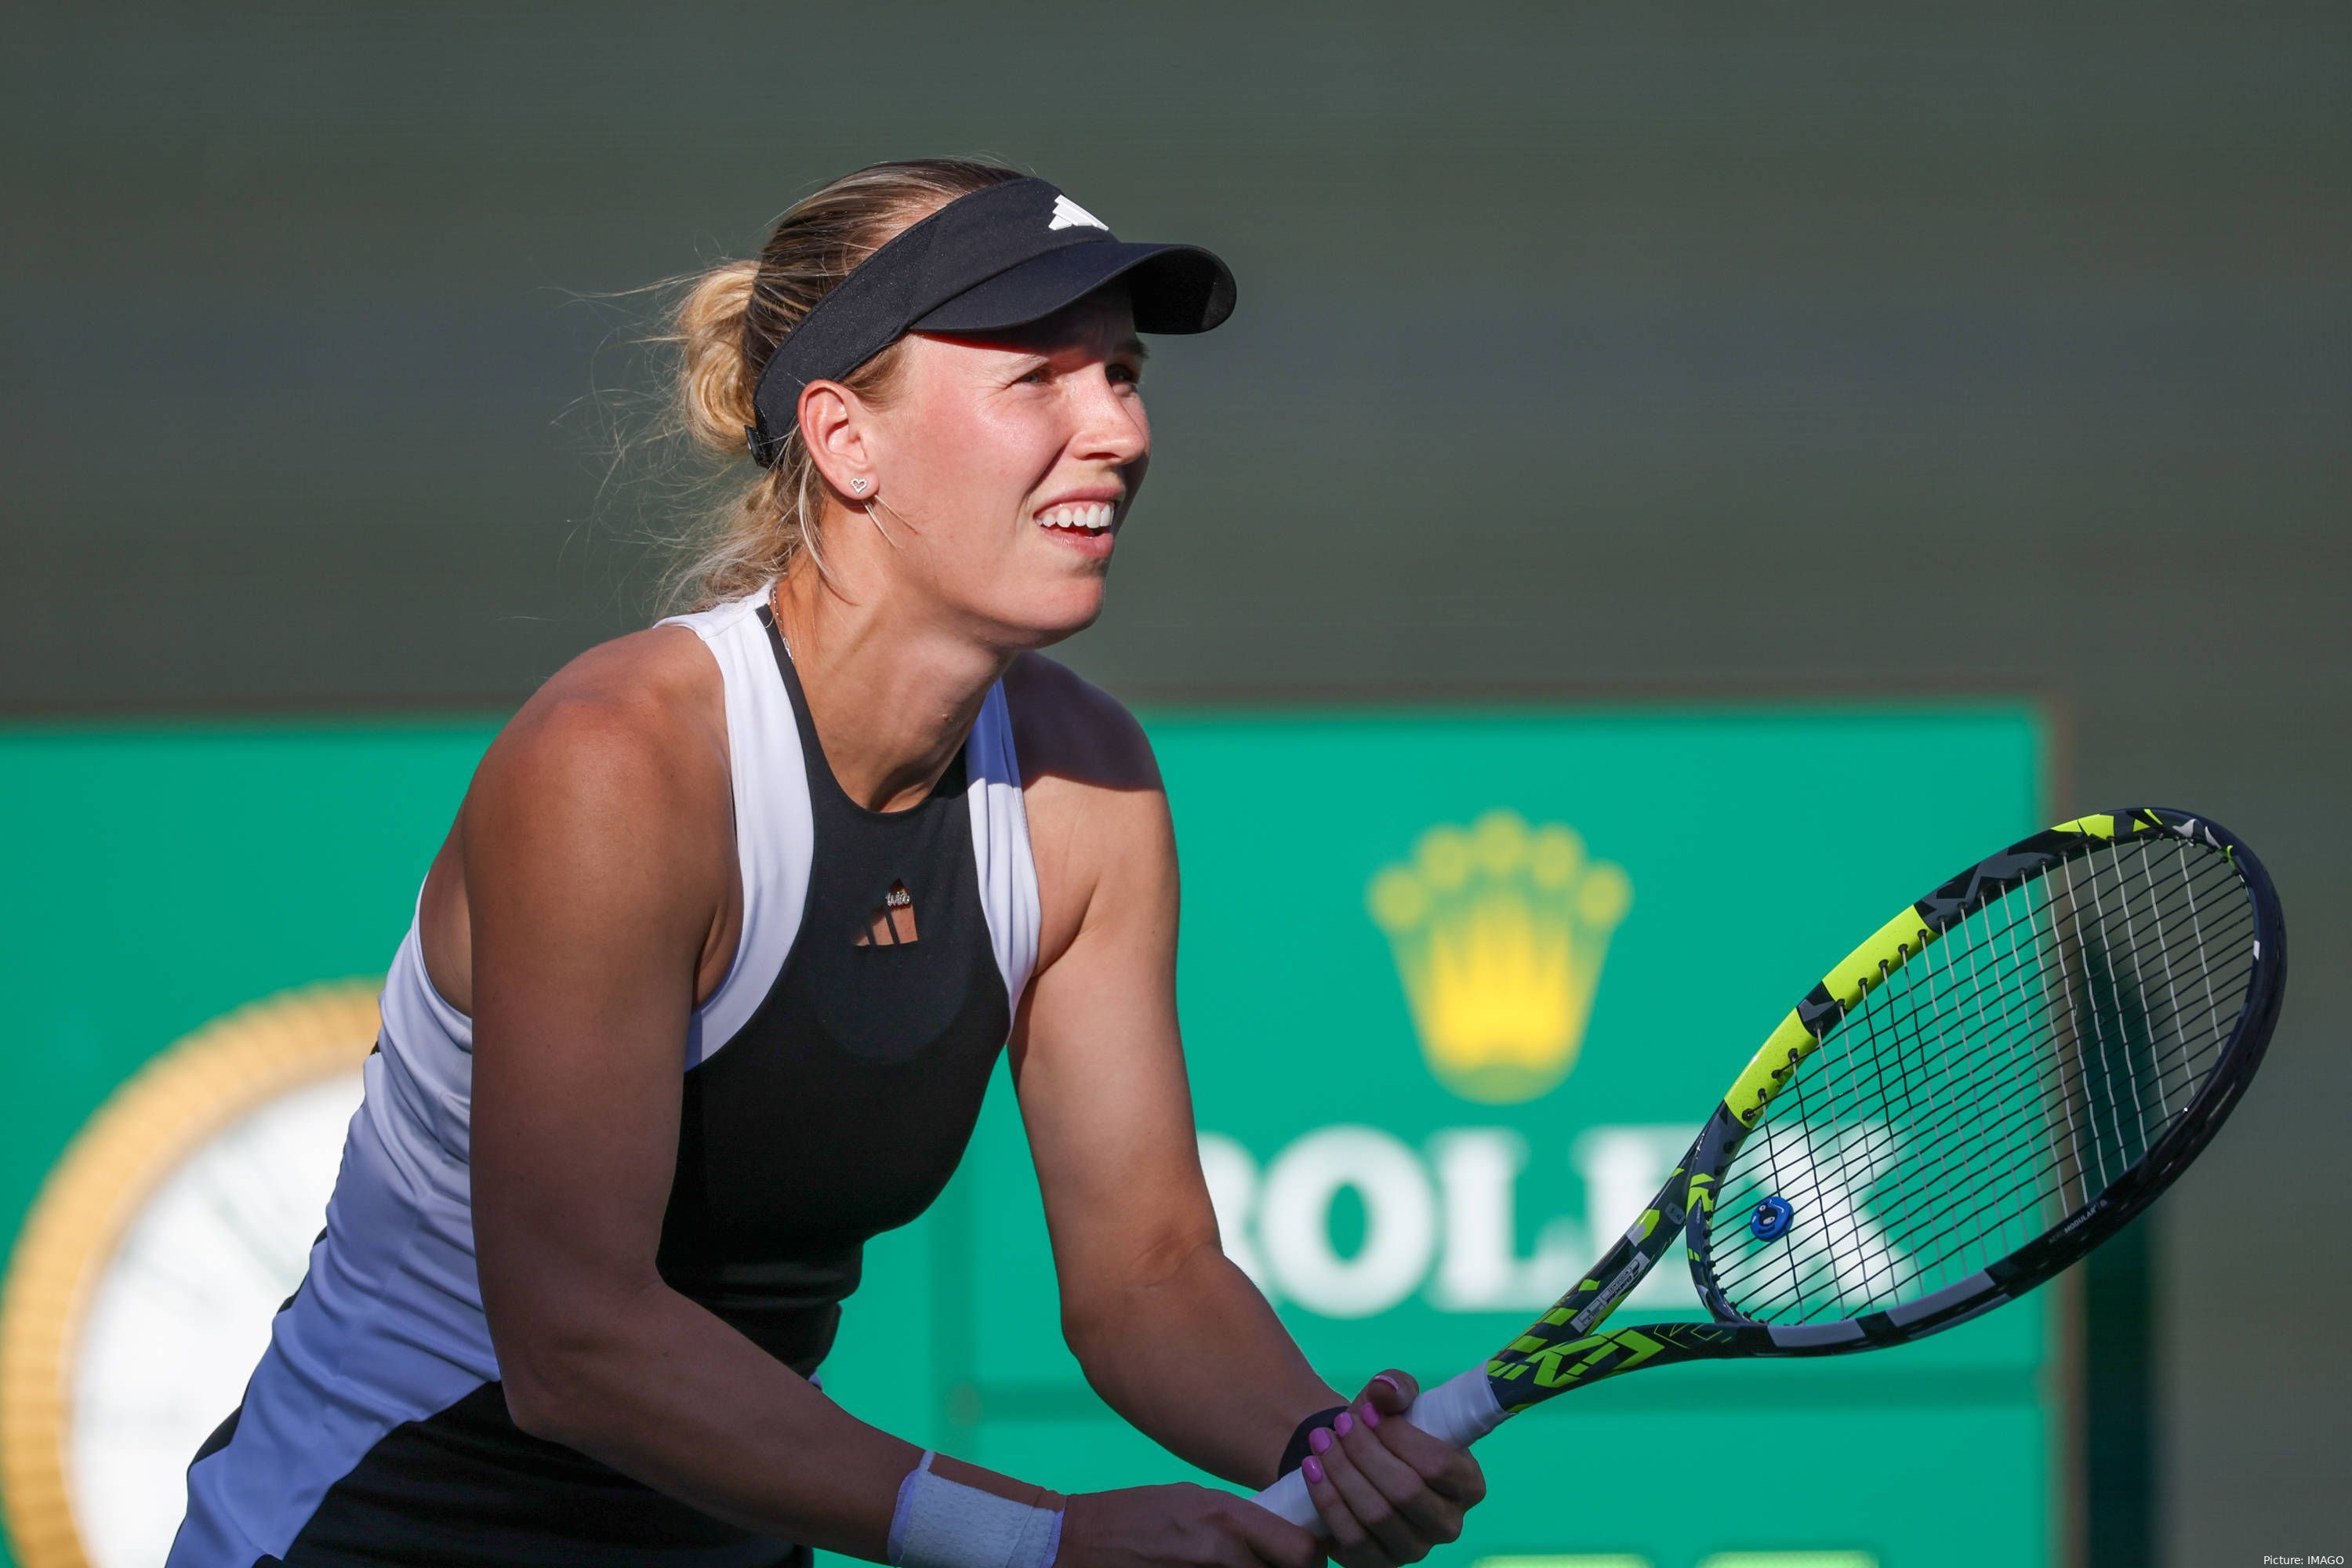 Caroline Wozniacki (pictured) is one of this week's main ranking winners.